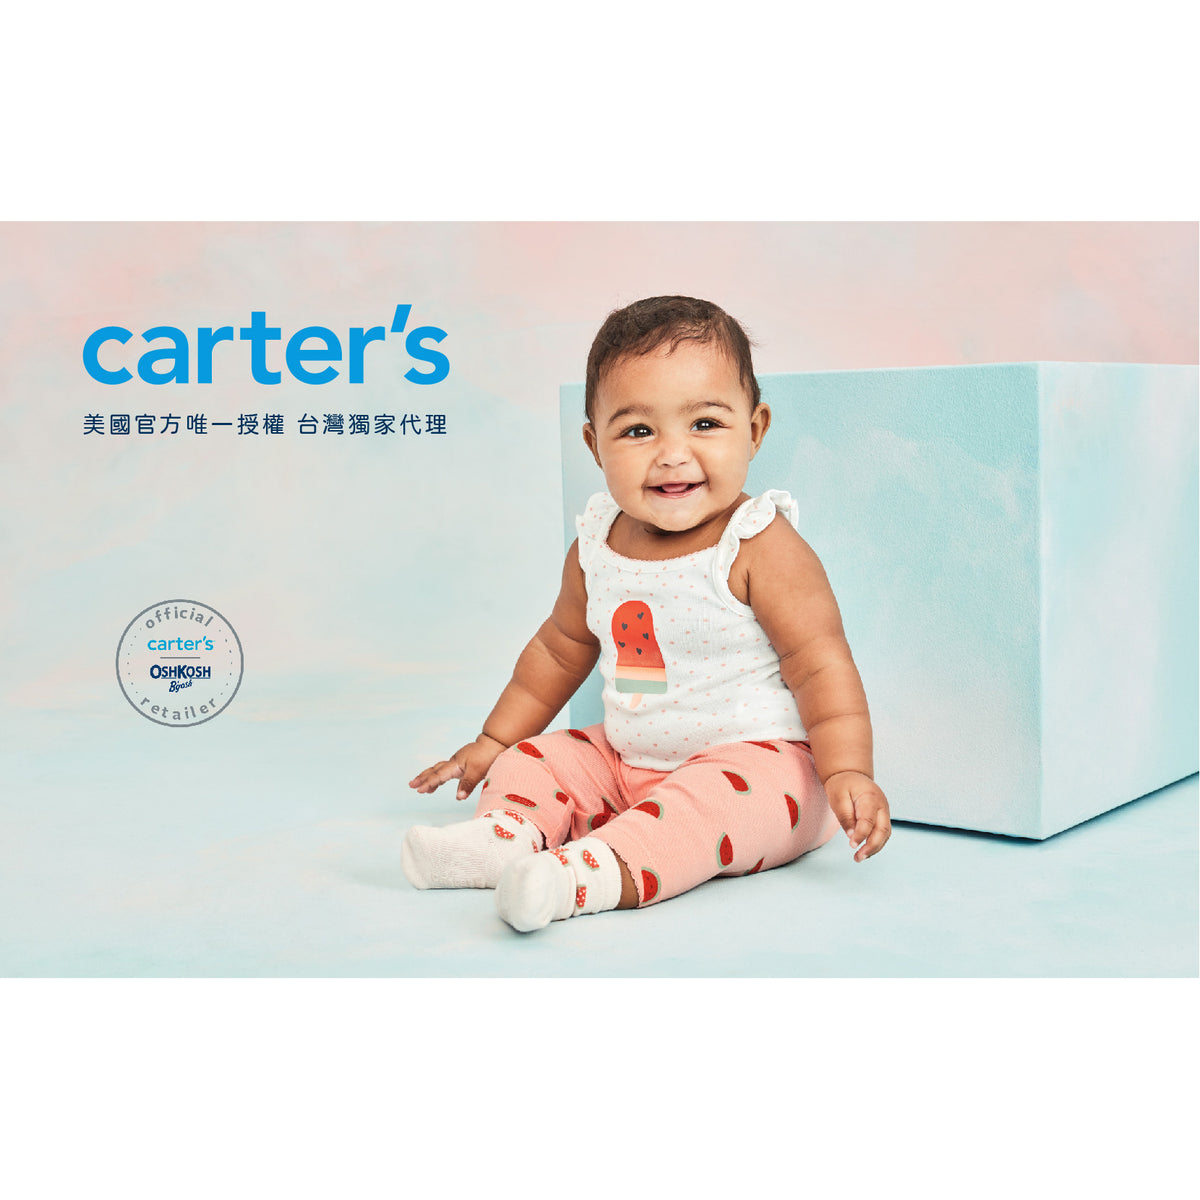 Carter's 花漾粉點3件組套裝(6M-24M)